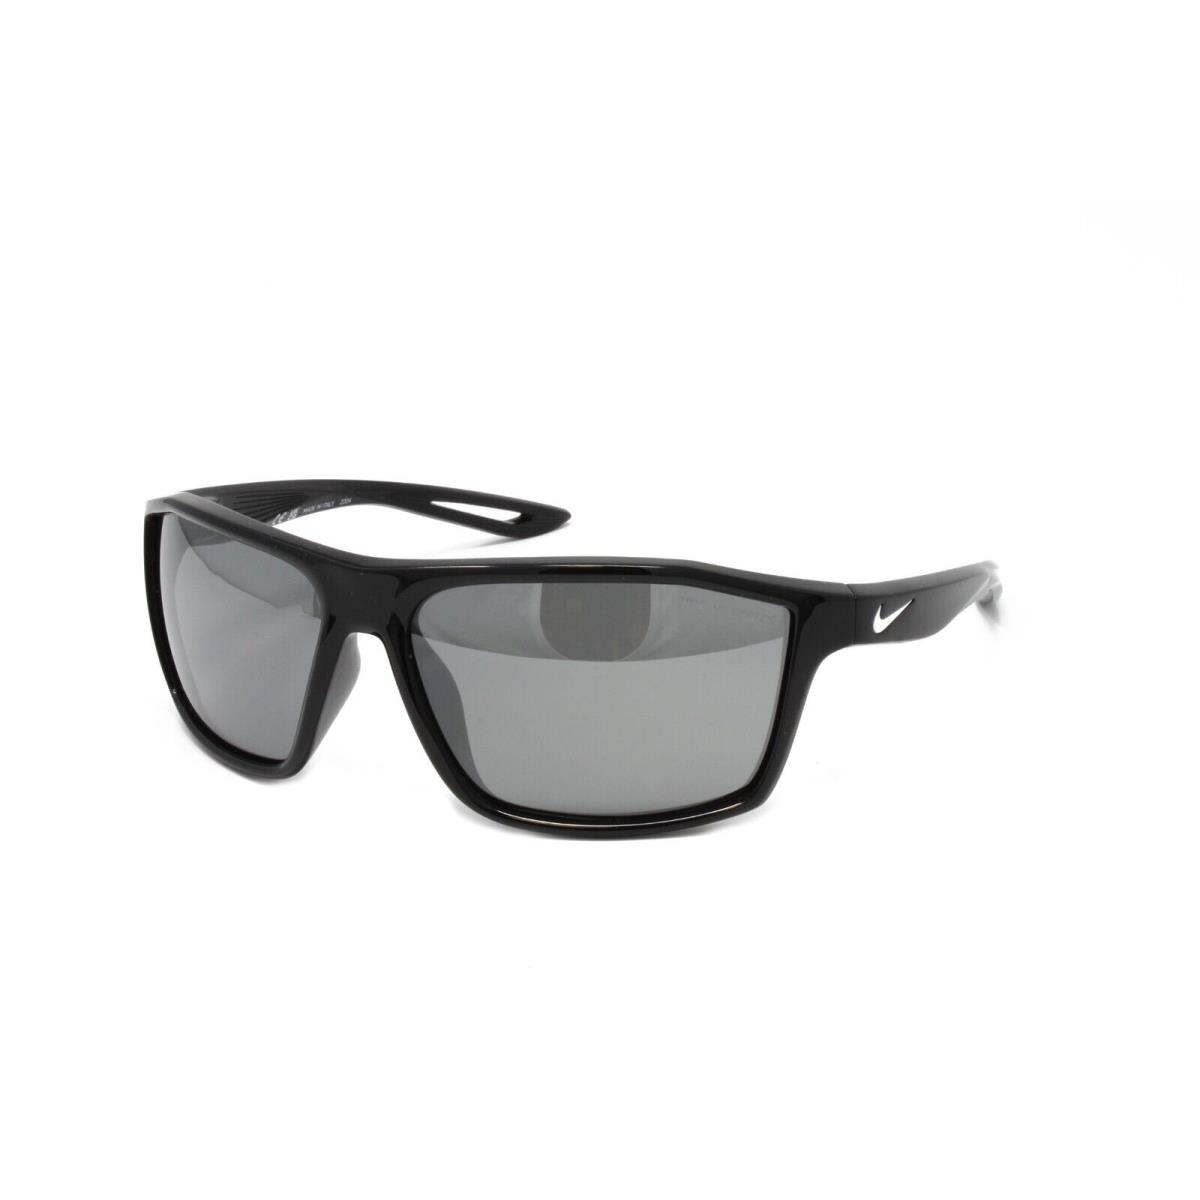 Nike Sunglasses Legend EV1061 010 Black 60mm Gray Silver Mirror Lens - Black Frame, Gray Lens